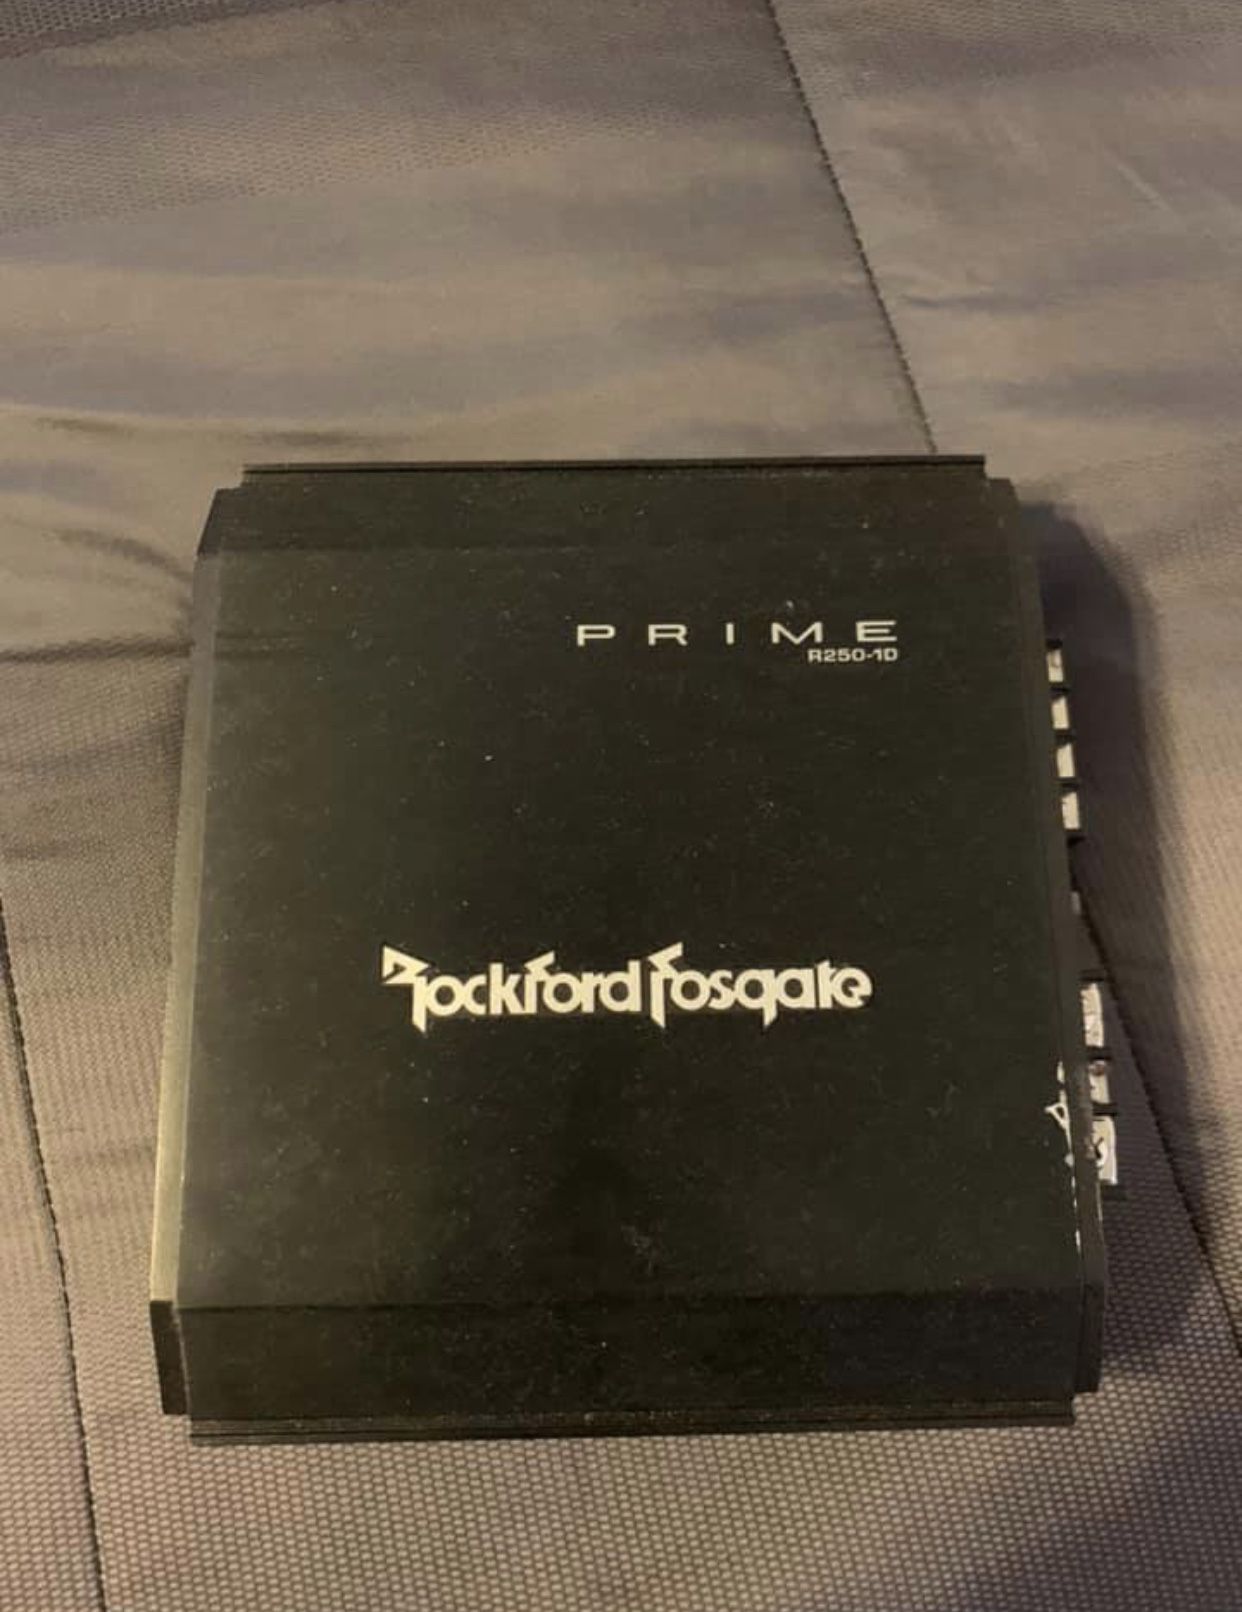 Rockford fosgate prime r250-1d and Subwoofer (12)